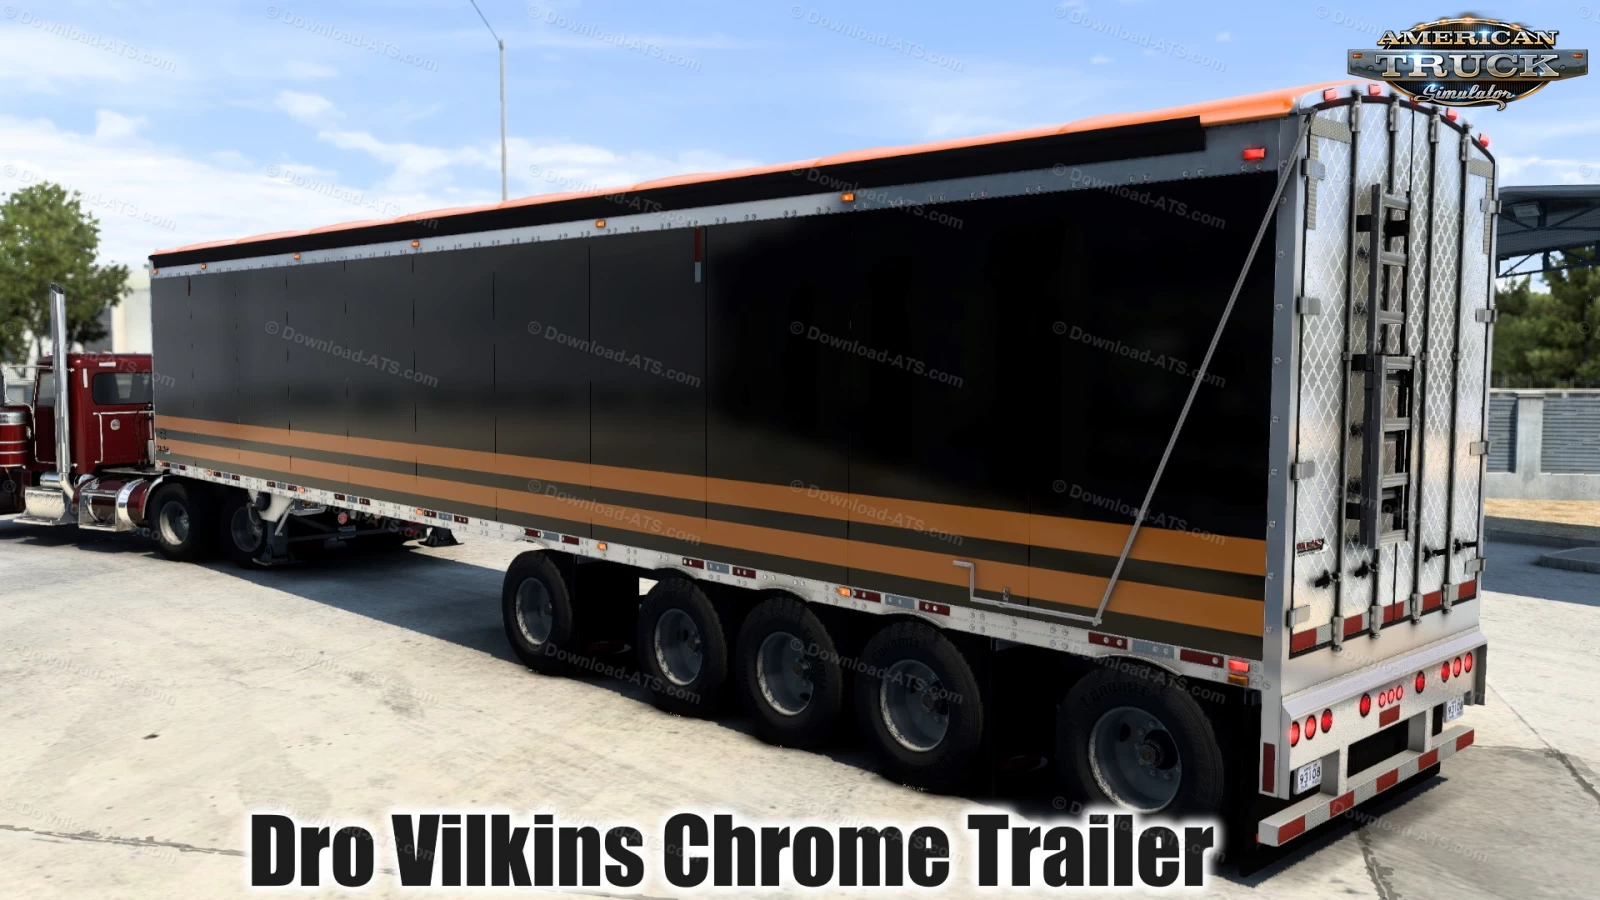 Dro Vilkins Chrome Trailer v1.0 (1.40.x) for ATS